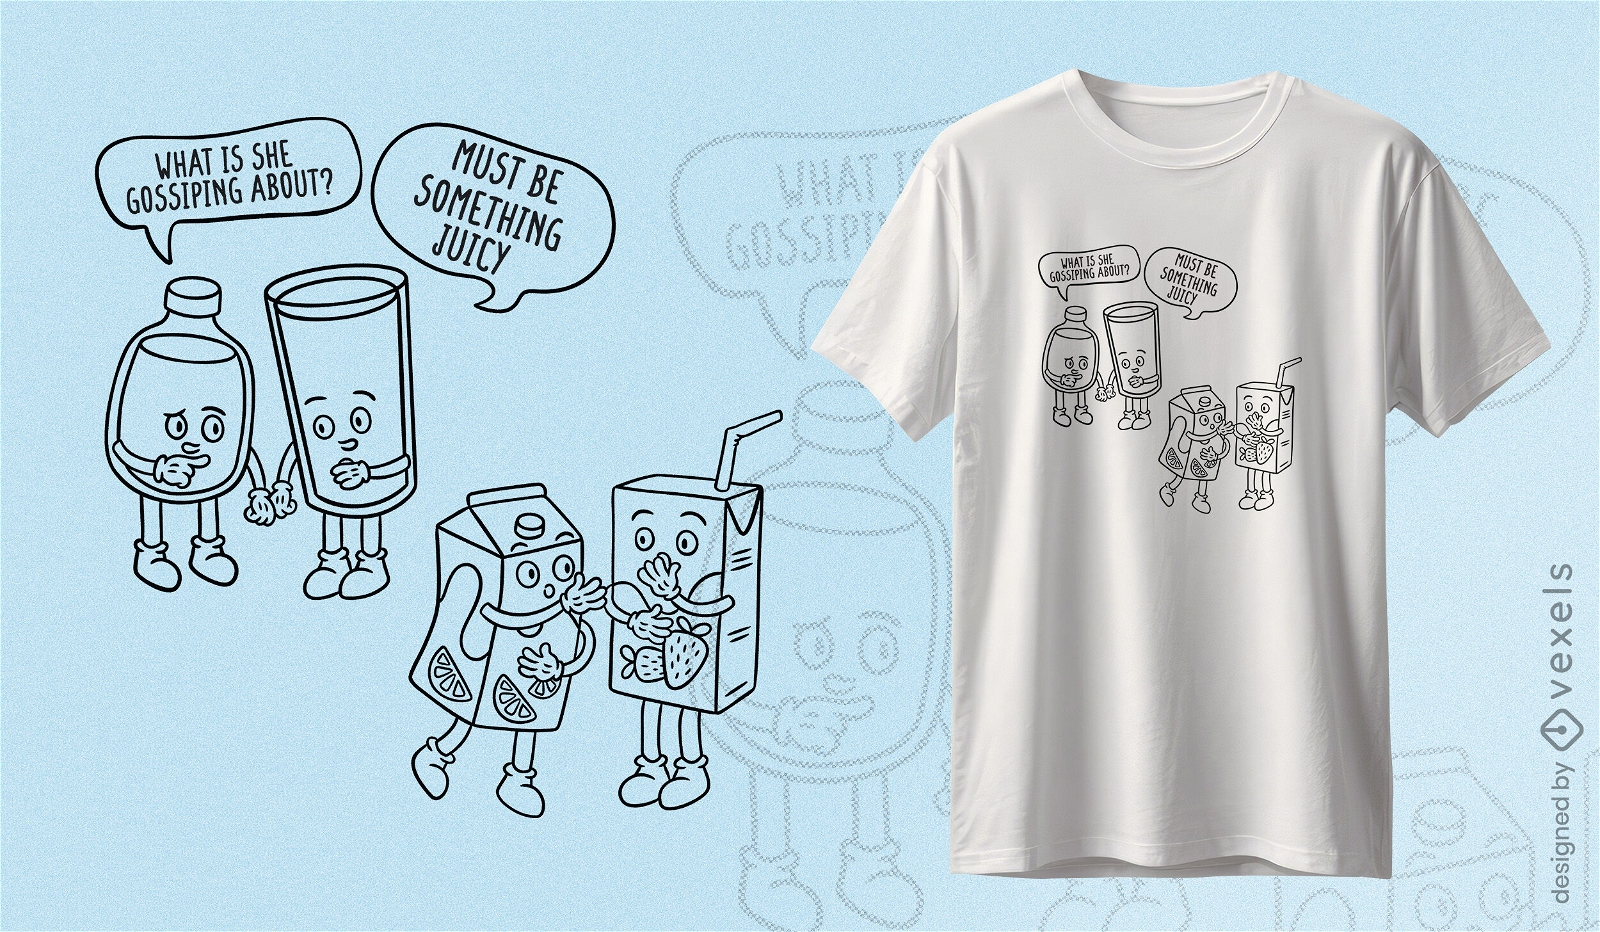 Saftbox-Charaktere klatschen im T-Shirt-Design